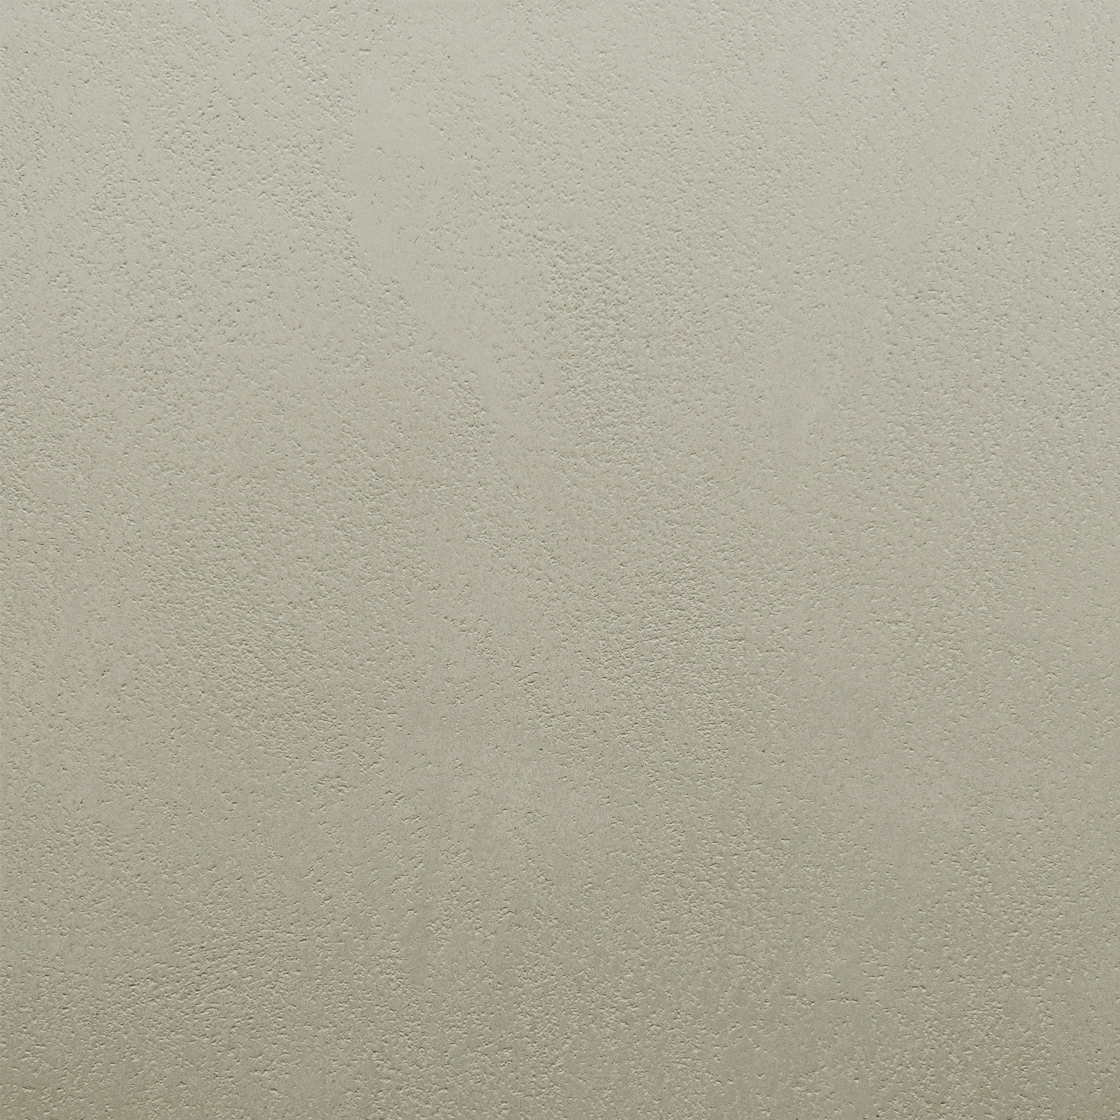 Close up of Armourcoat leatherstone exterior polished plaster finish - 64